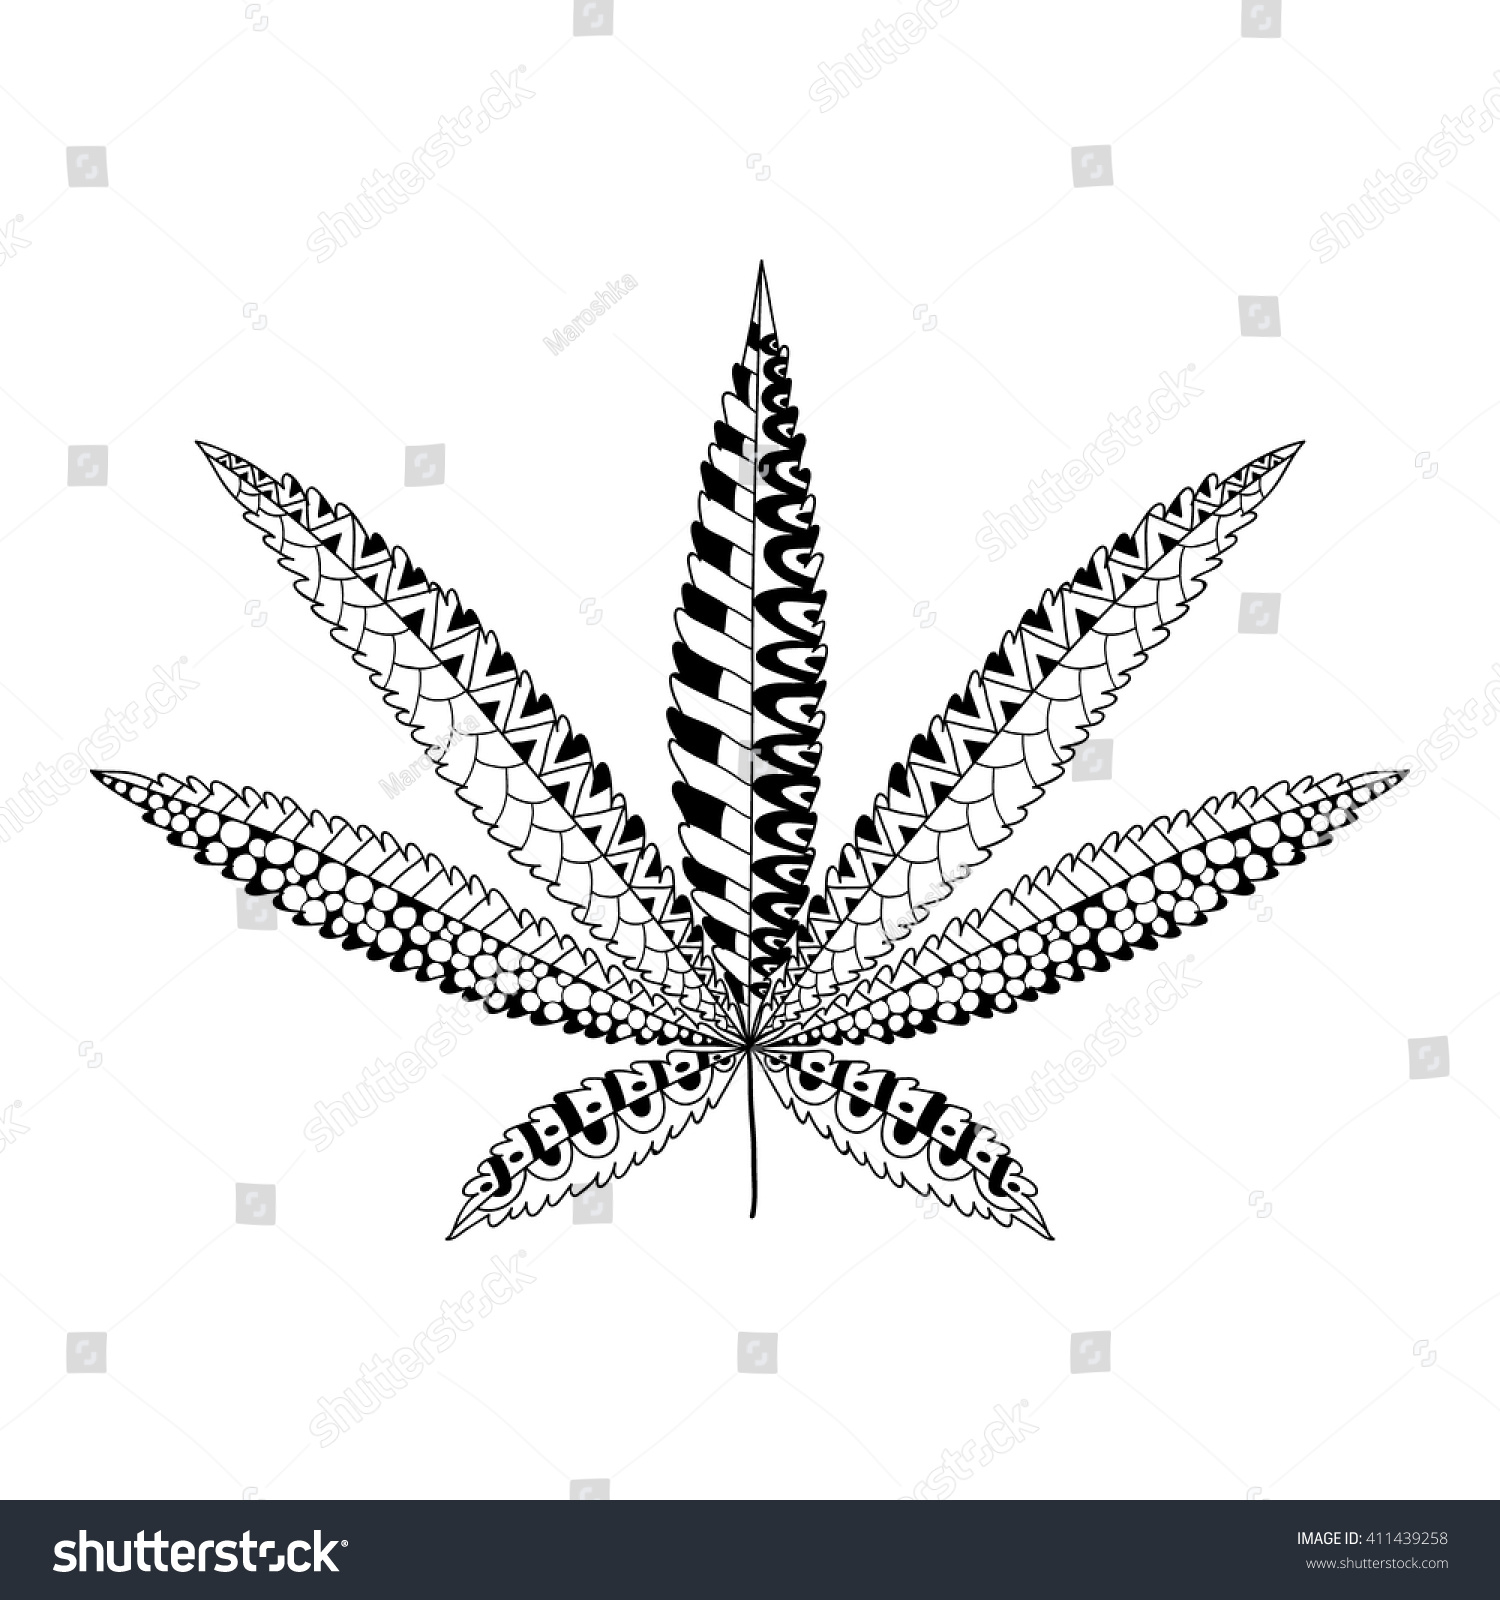 Download Hemp Cannabis Leaf Zentangle Style Marijuana Stock Vector (Royalty Free) 411439258 - Shutterstock